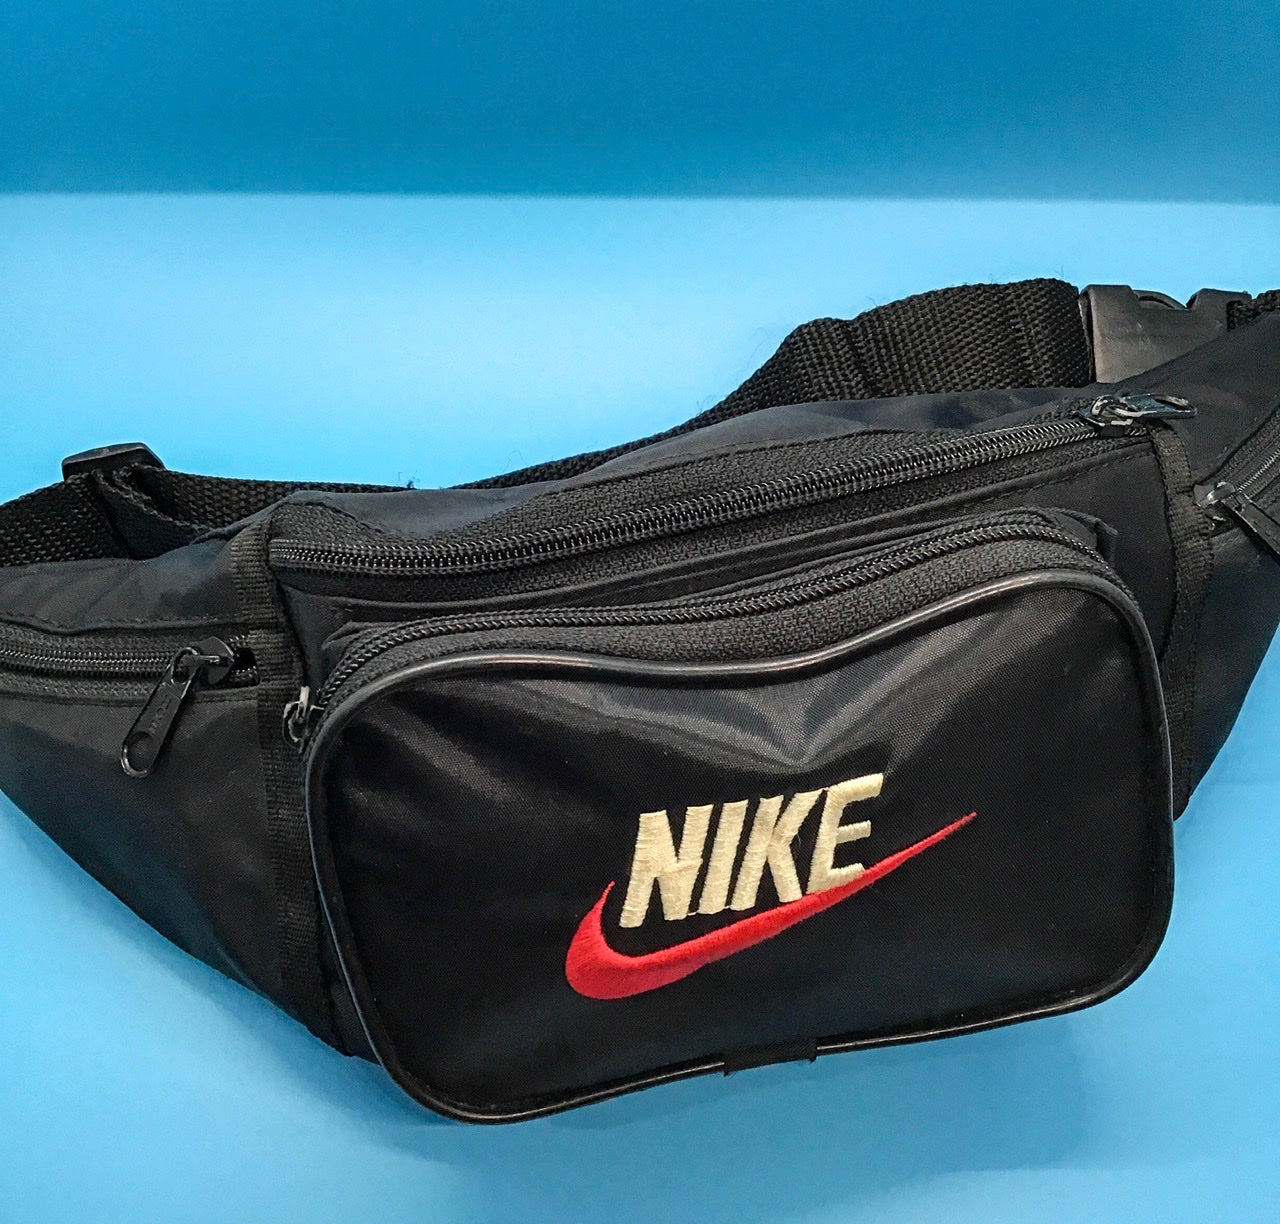 Afwijzen smokkel Regenachtig Vintage Nike fanny waist bag – recycled glory